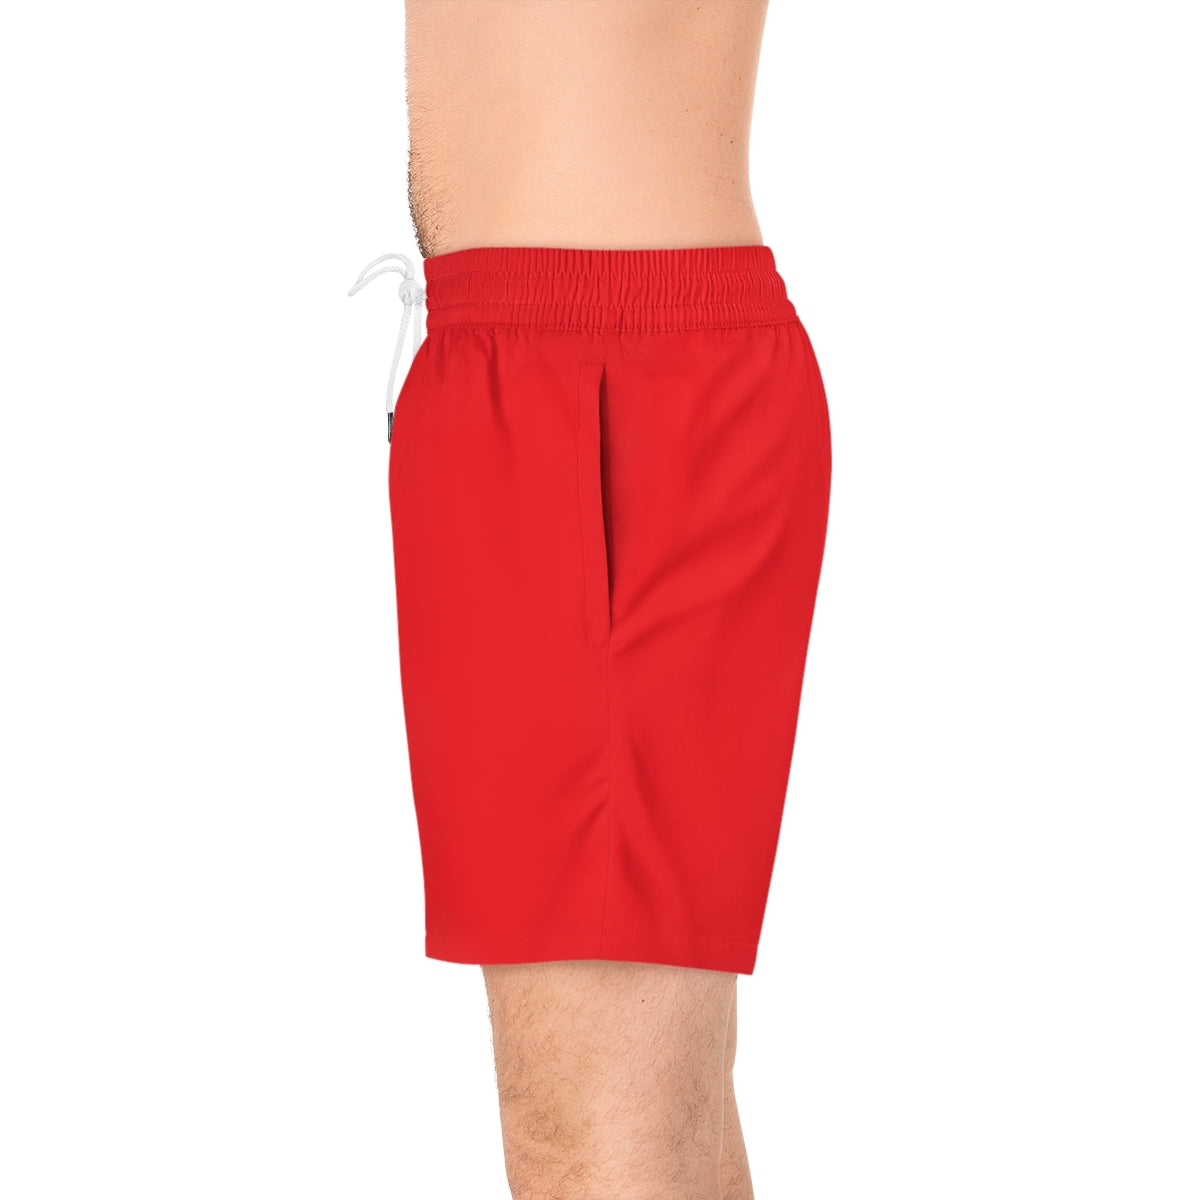 Hawkins Pool Lifeguard Shorts Billy Costume Men's Mid-Length Swim Shorts